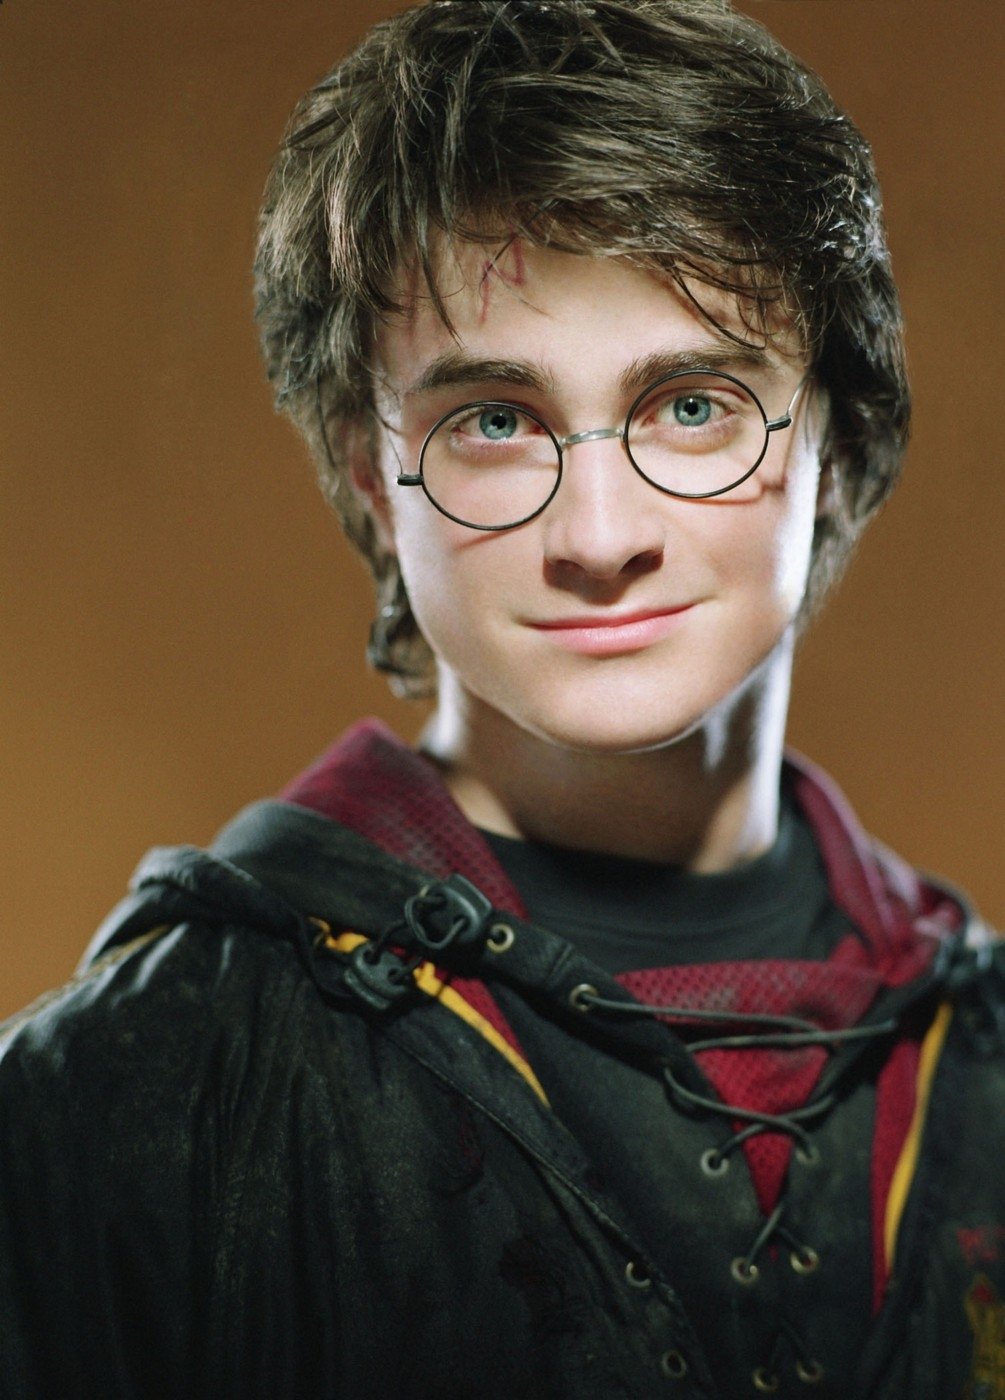 V roli Harryho Pottera byl Daniel roztomilý.